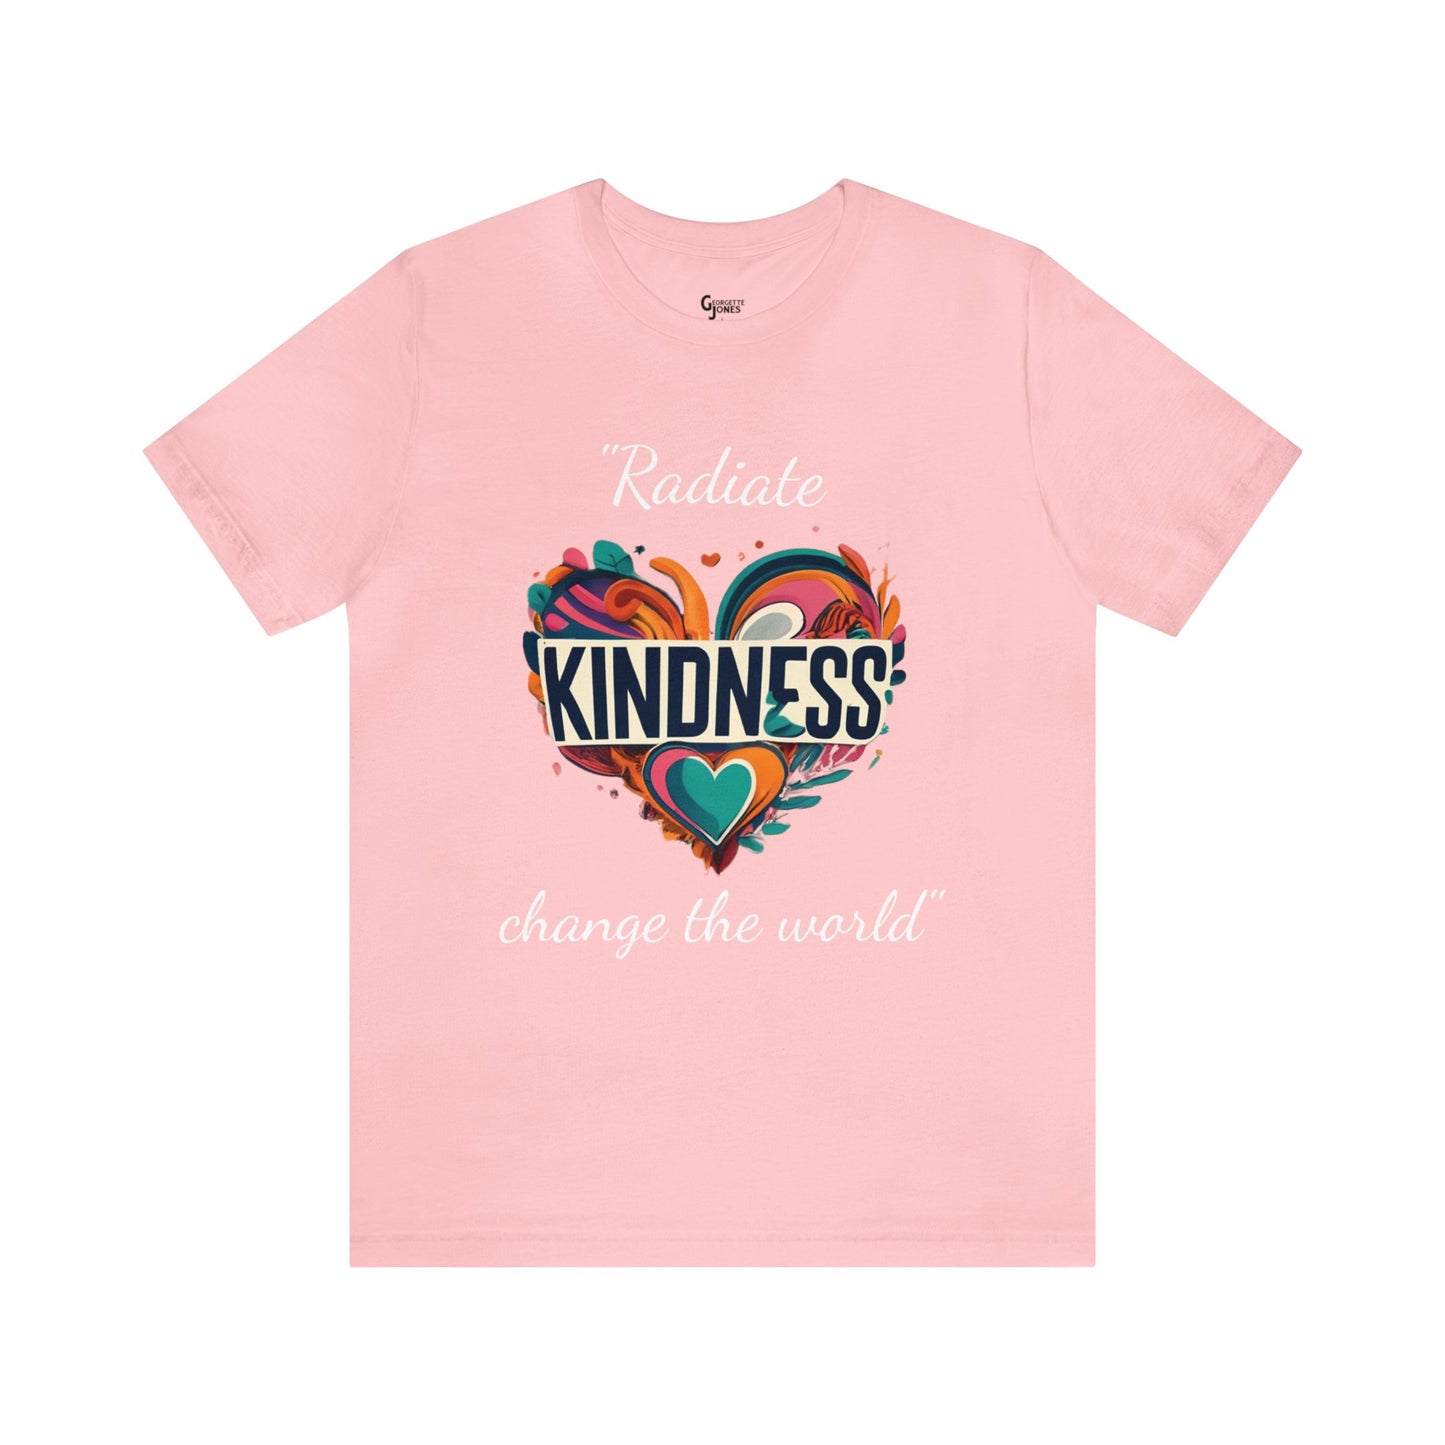 Radiate Kindness, Change the World - Unisex T-shirt